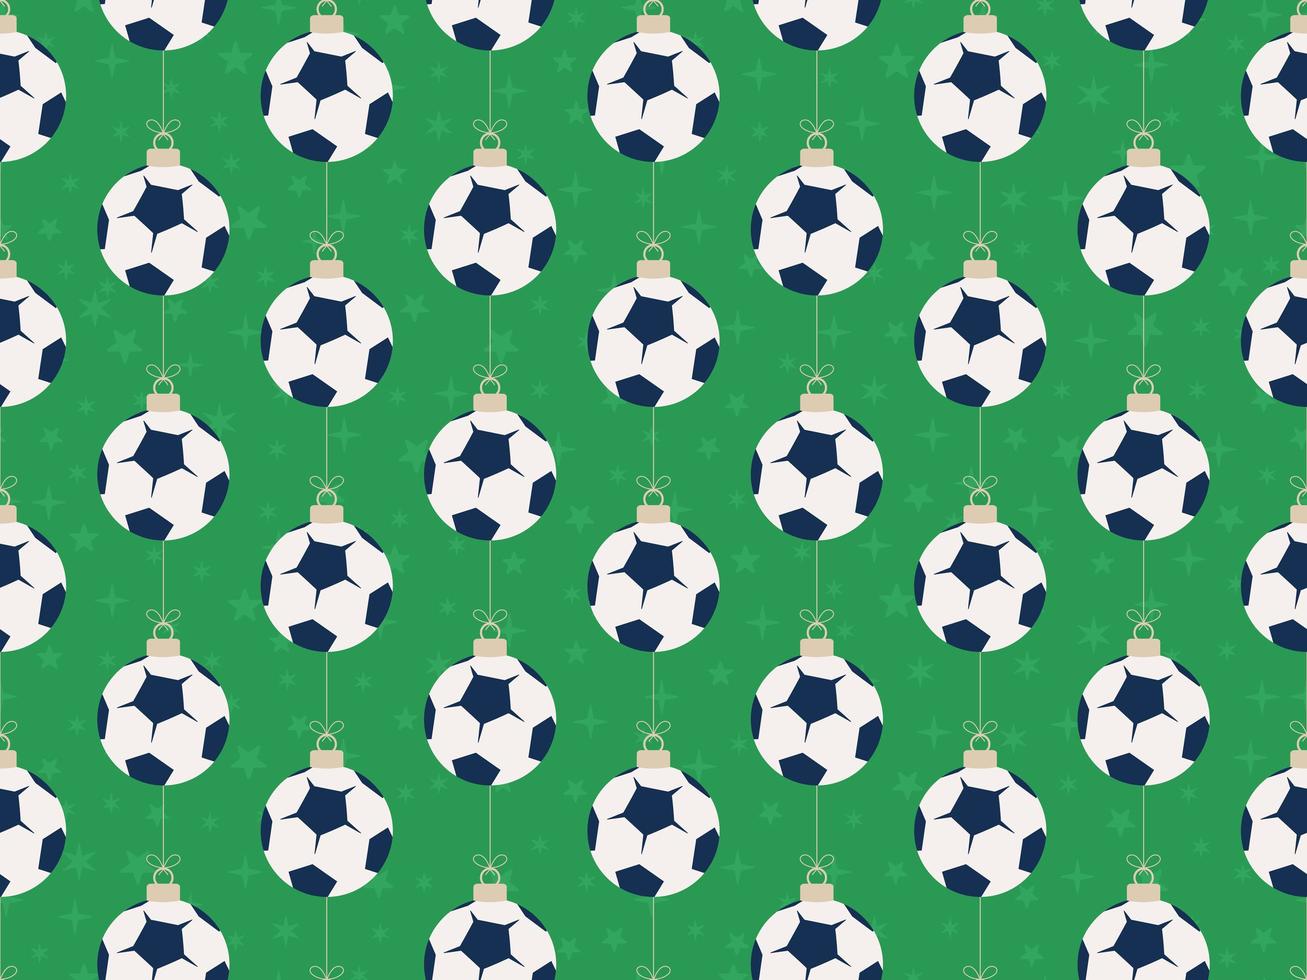 Merry Christmas soccer or football seamless horizontal pattern vector